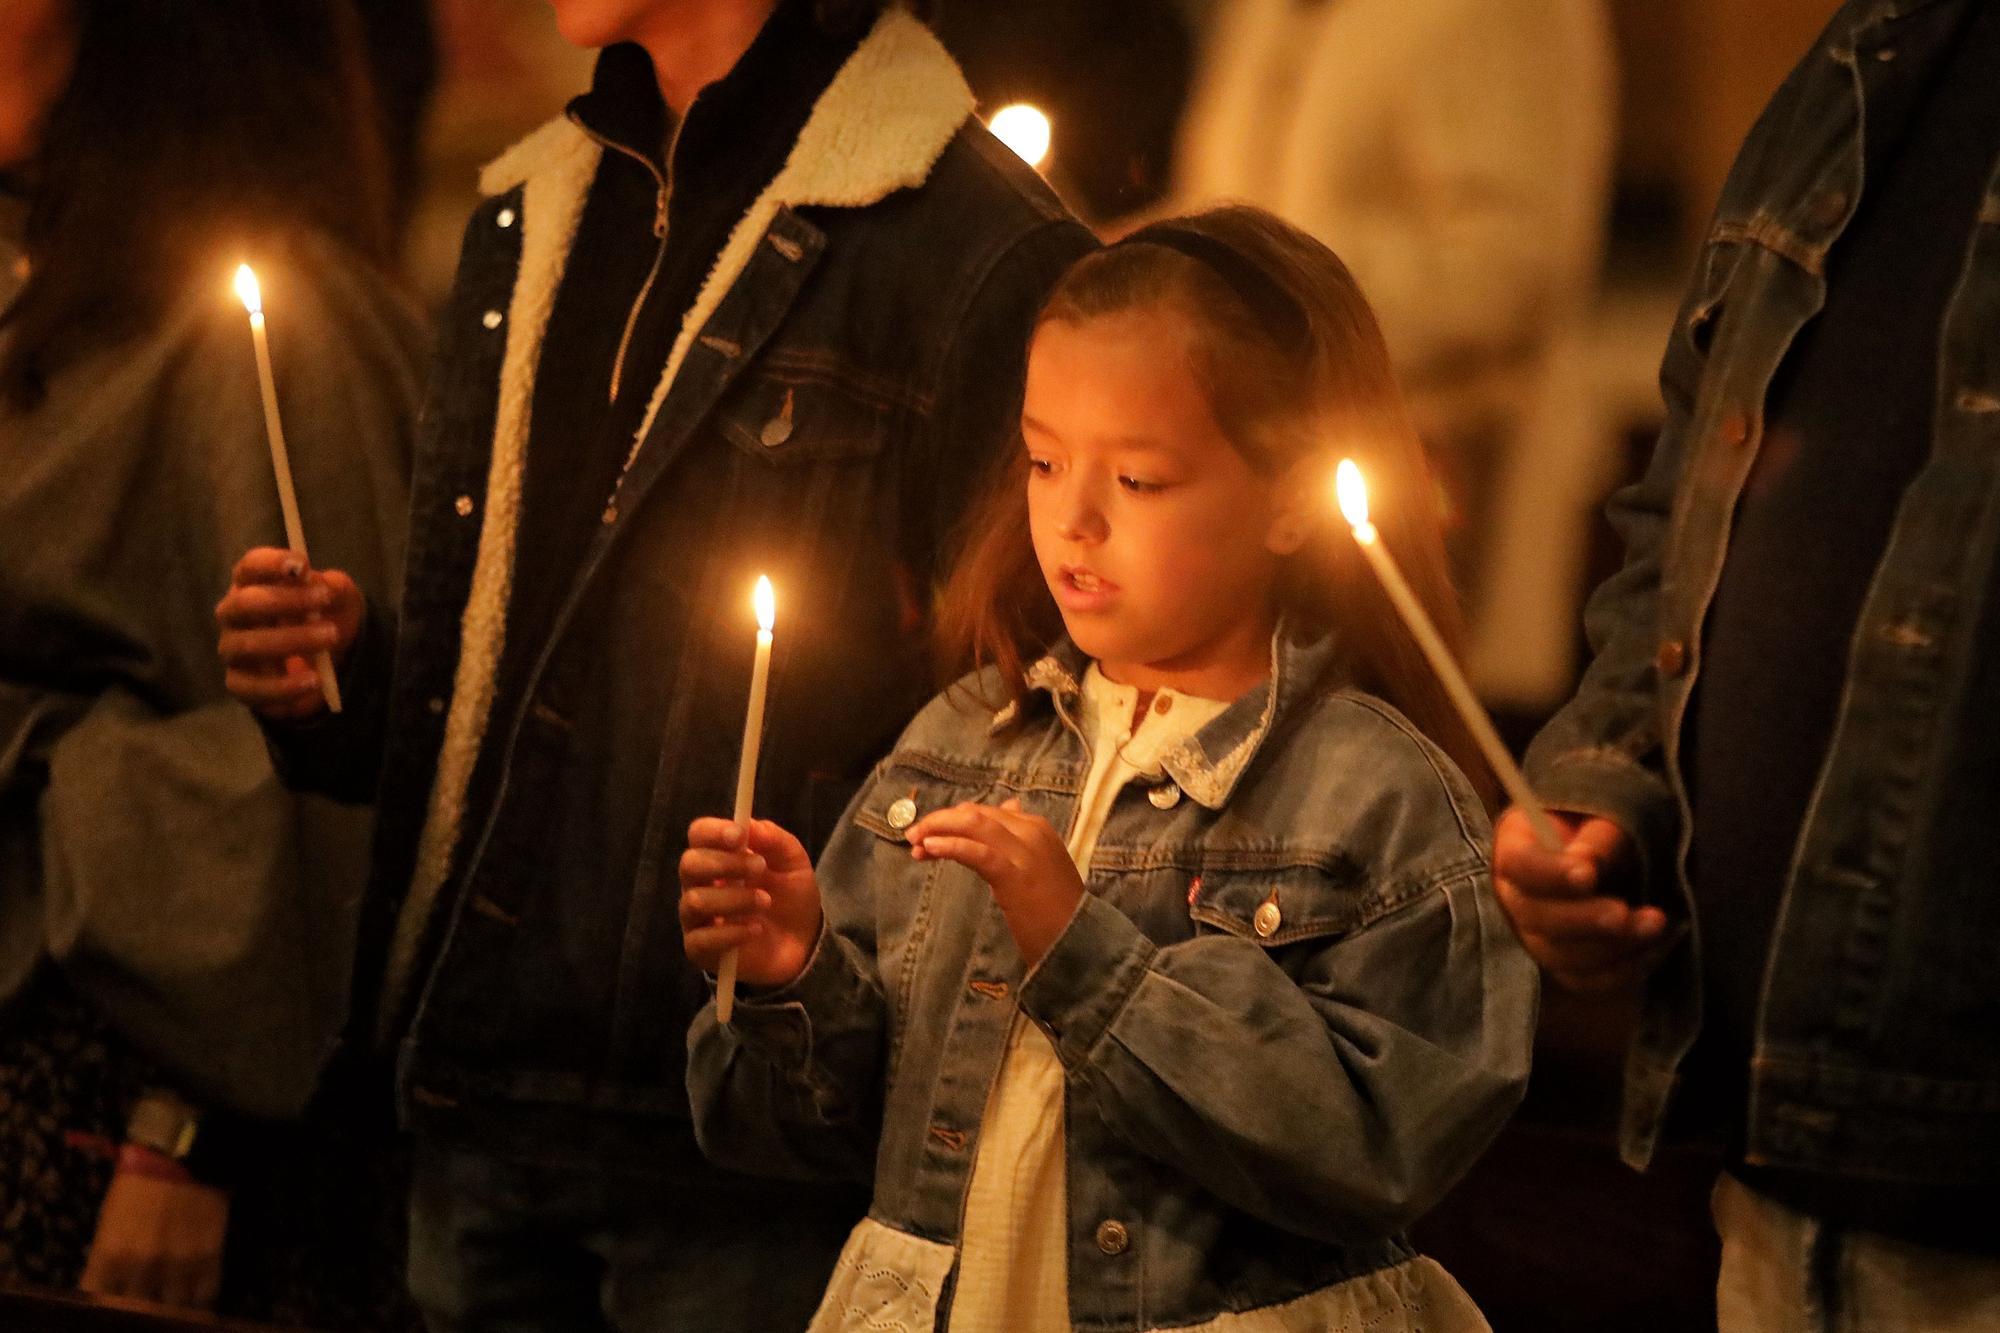 Las fotos de la Vigilia Pascual de la Semana Santa de Vila-real